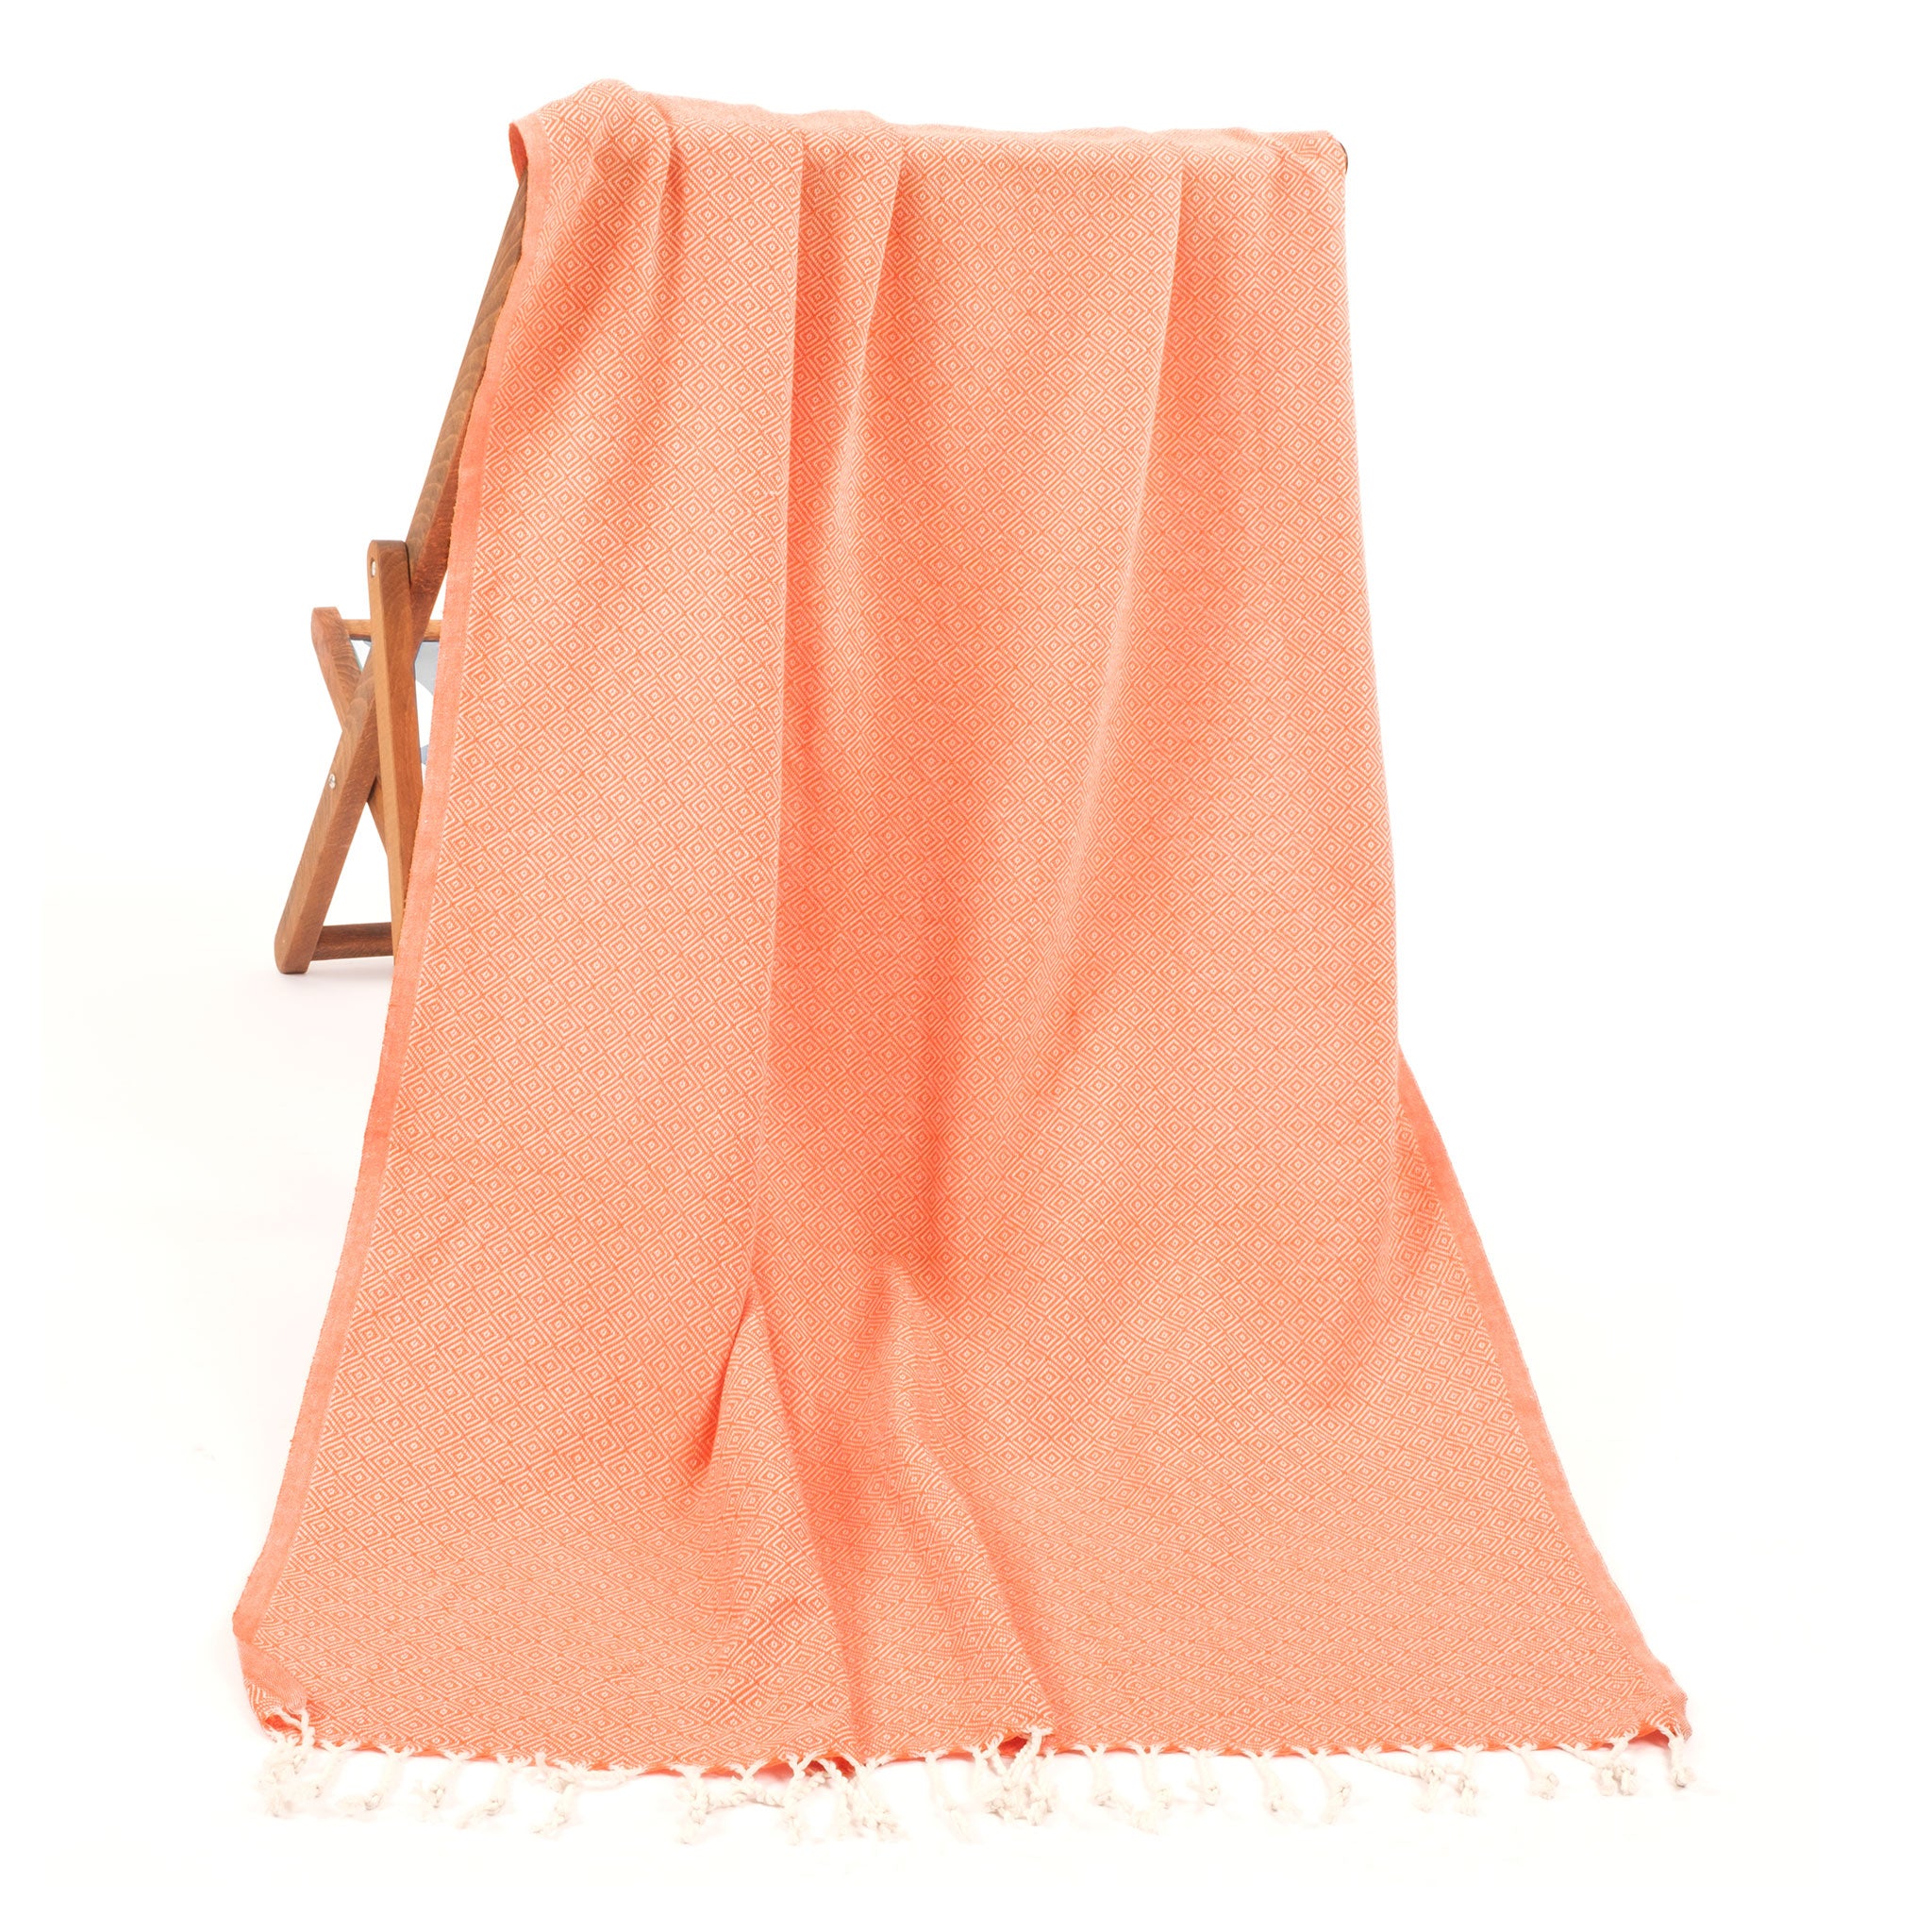 American Soft Linen - 100% Cotton Turkish Peshtemal Towels 40x70 Inches - Orange - 1